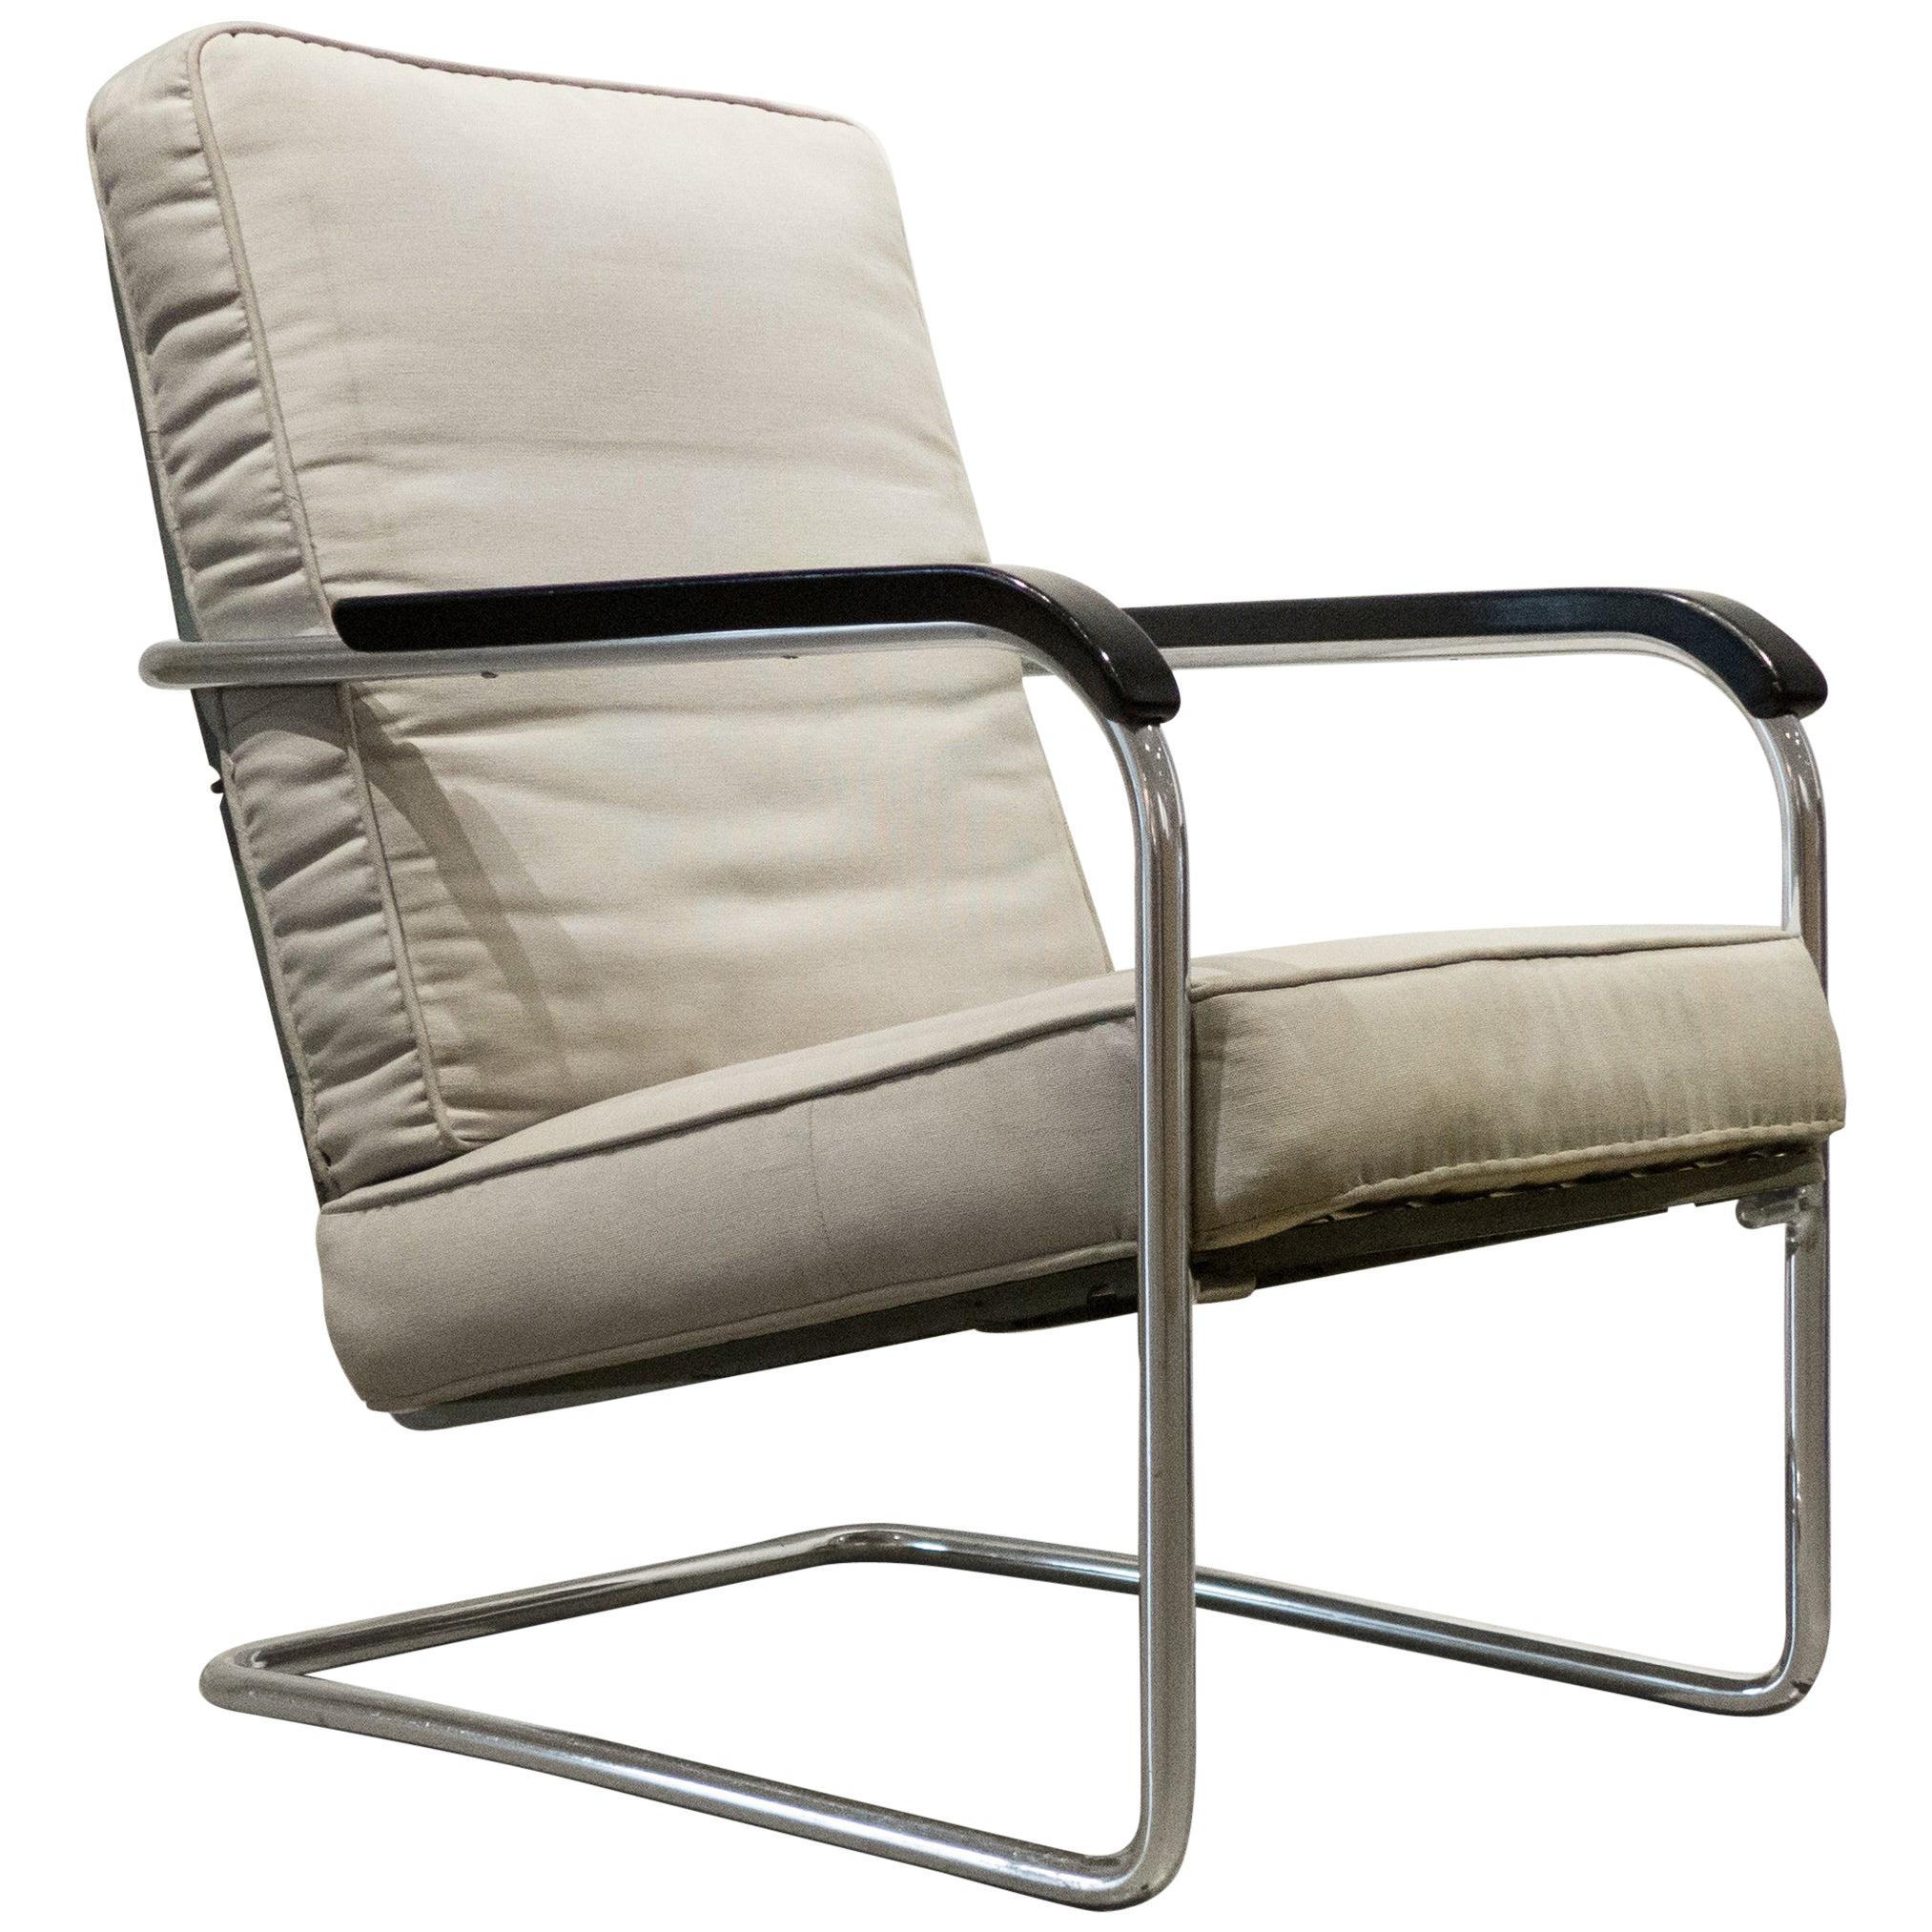 Early Werner Max Moser High Back Adjustable Armchair by Embru Werke